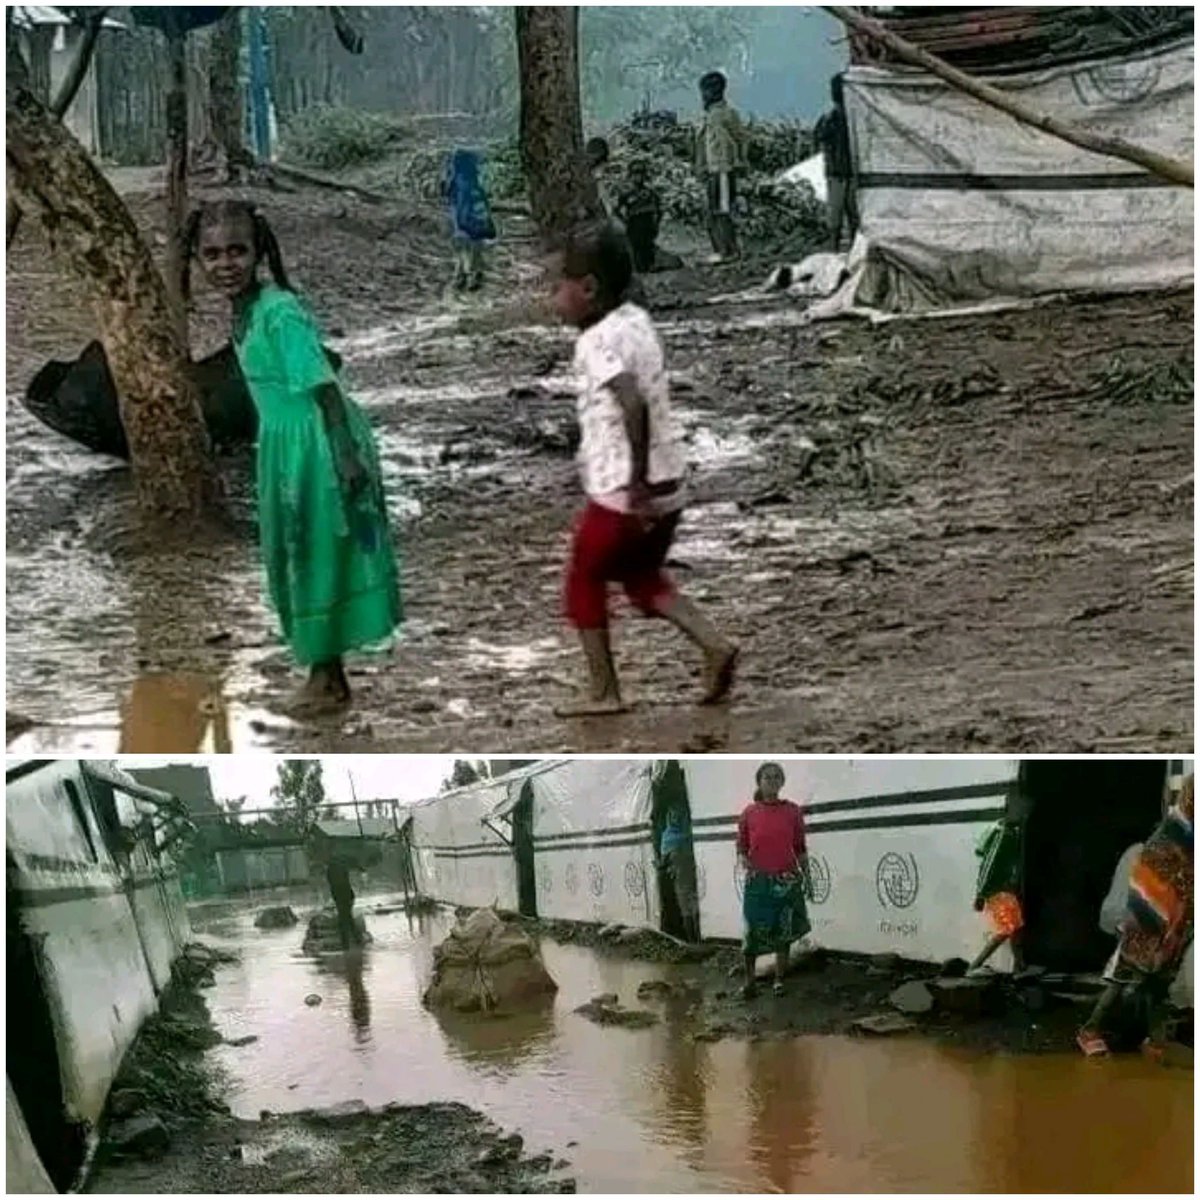 It is really sad💔😥 to see #TegaruIDPs being suffered due to the heavy rains.End #Tigray siege make #TegaruIDPs back to their home.
#AmharaOutOfTigray 
#EriteraOutOfTigray
#UpholdPretoriaAgreement
#ReturnTegaruIDPs 
@hrw @US_AU @SecBlinken @amnesty @EU_Commission @hrw
@Lwam2324